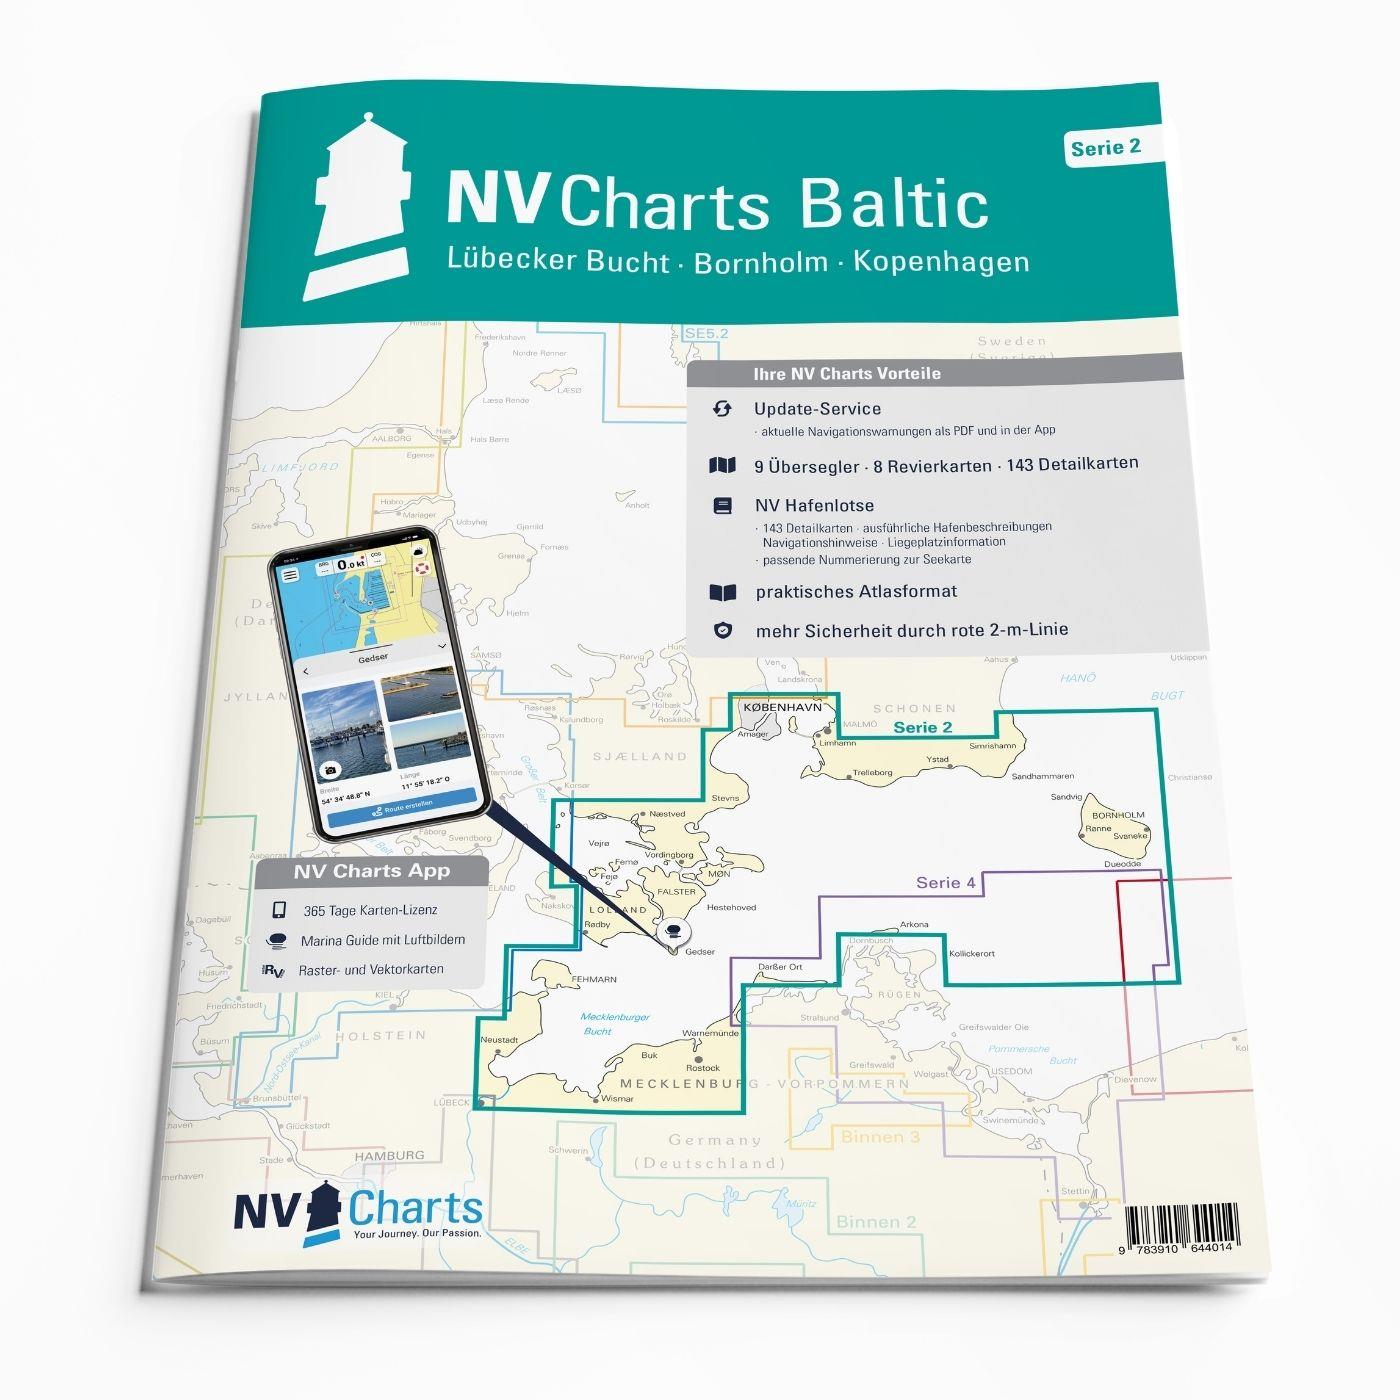 Subscription - NV Charts Baltic Region 2 Lübeck - Bornholm - Copenhagen